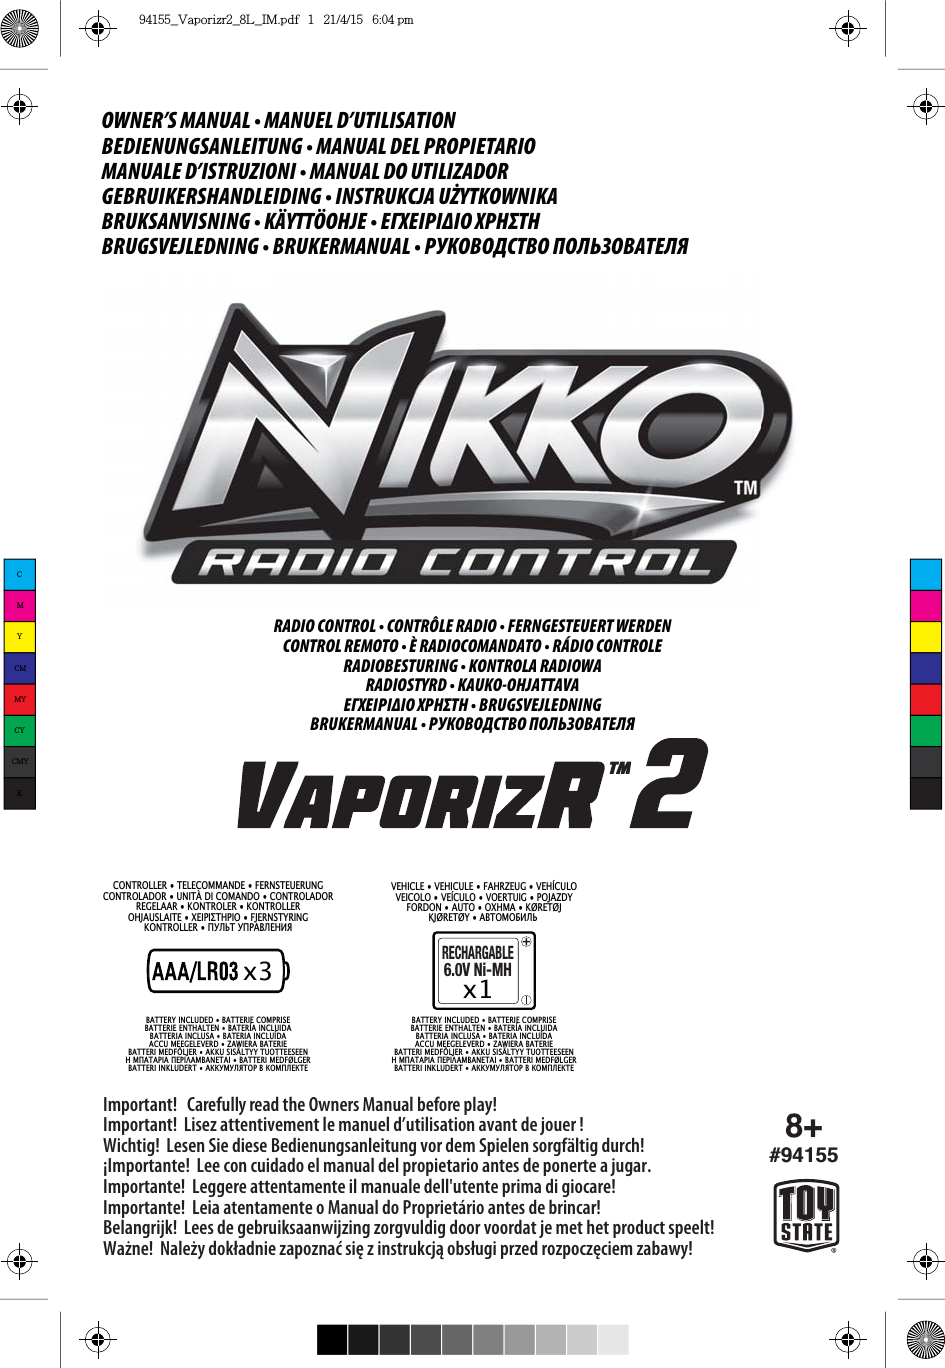 nikko vaporizr 2 instructions